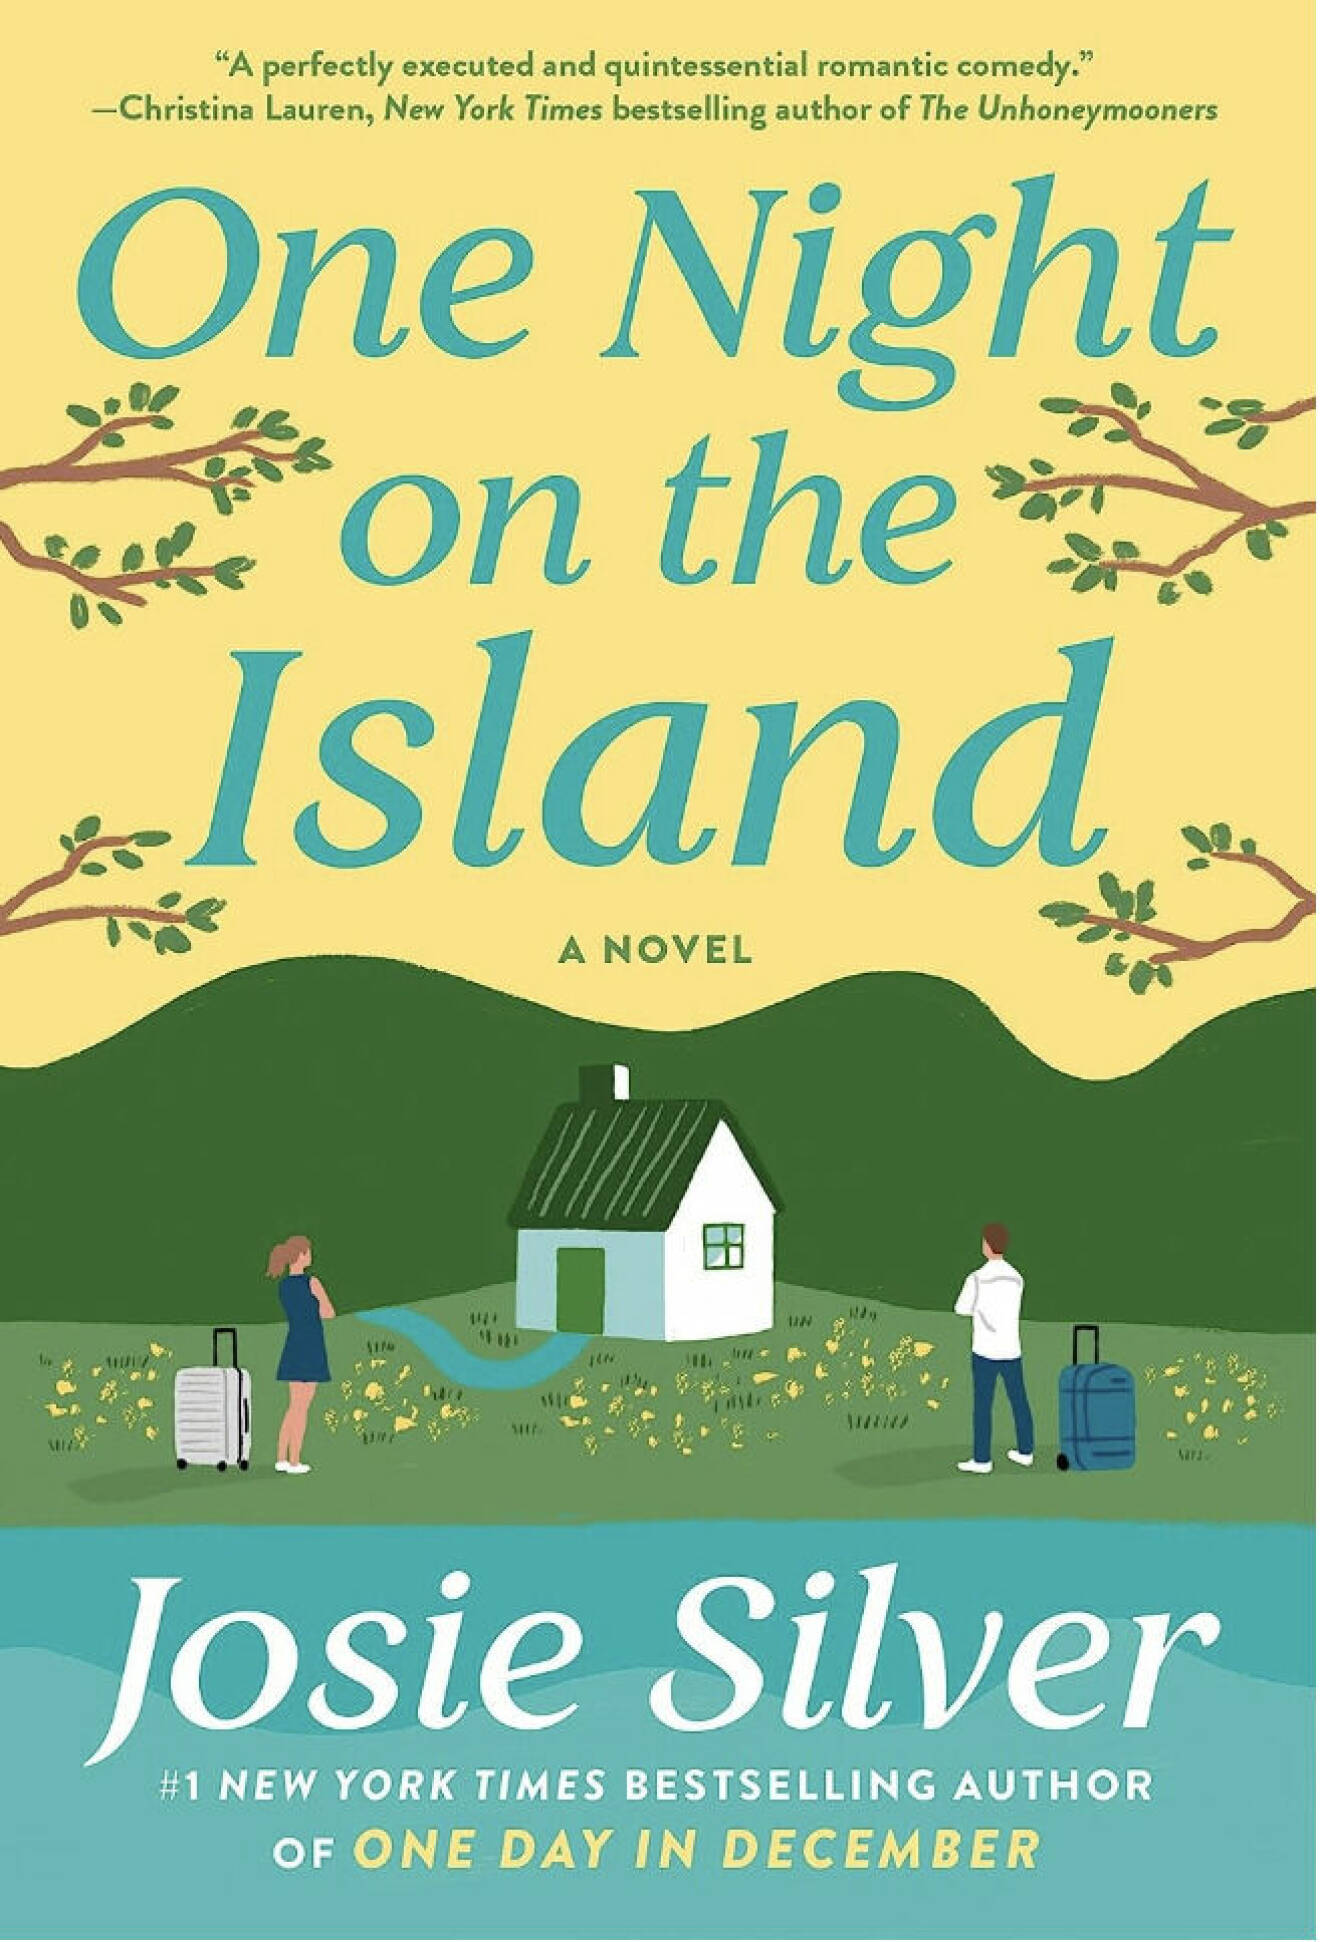 One night on the island